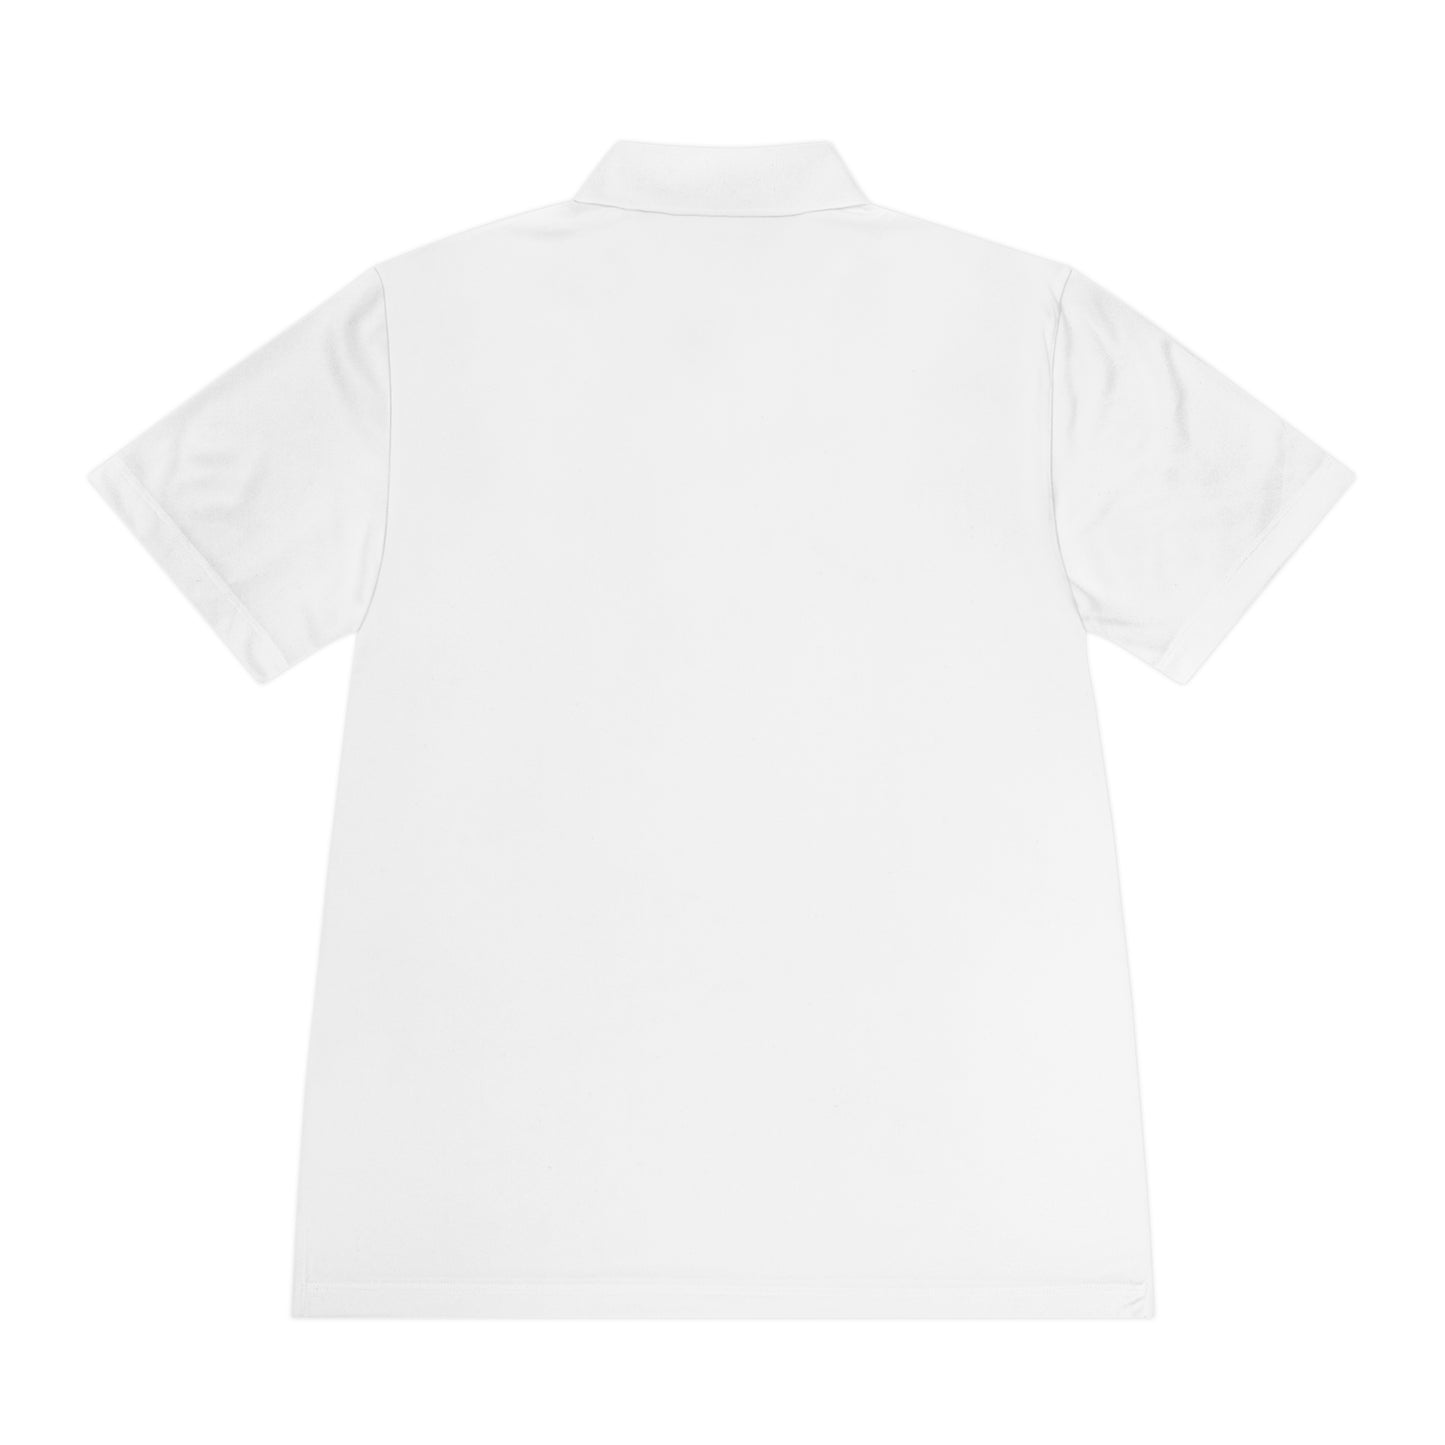 Penarol Men's Sport Polo Shirt